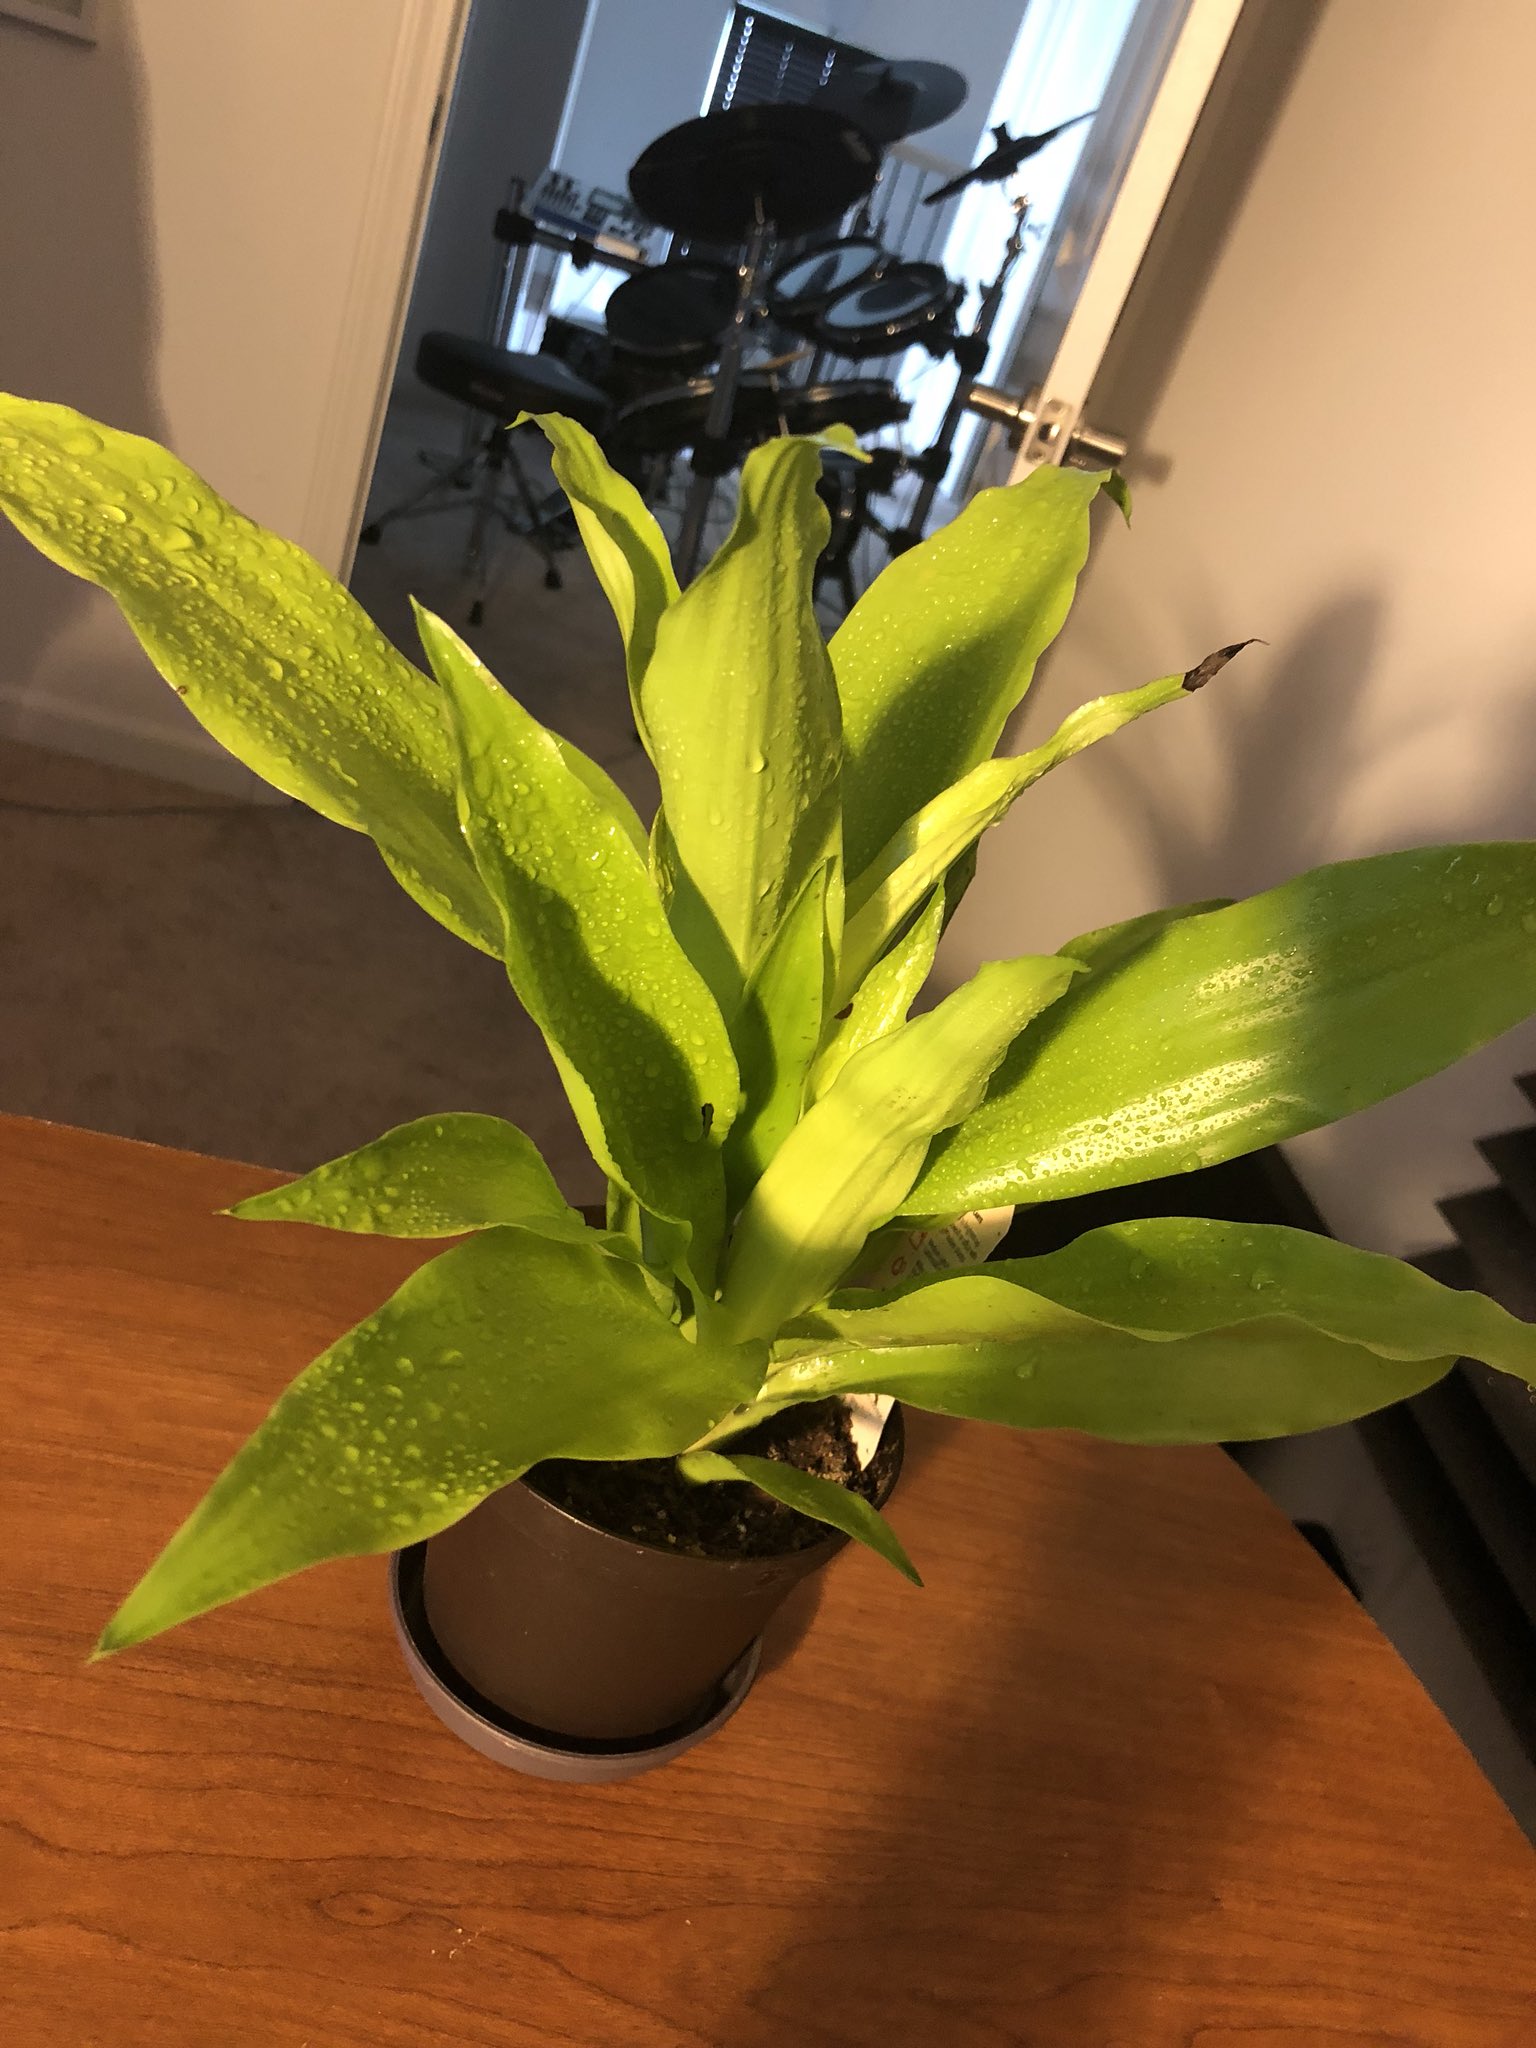 Momo the plant